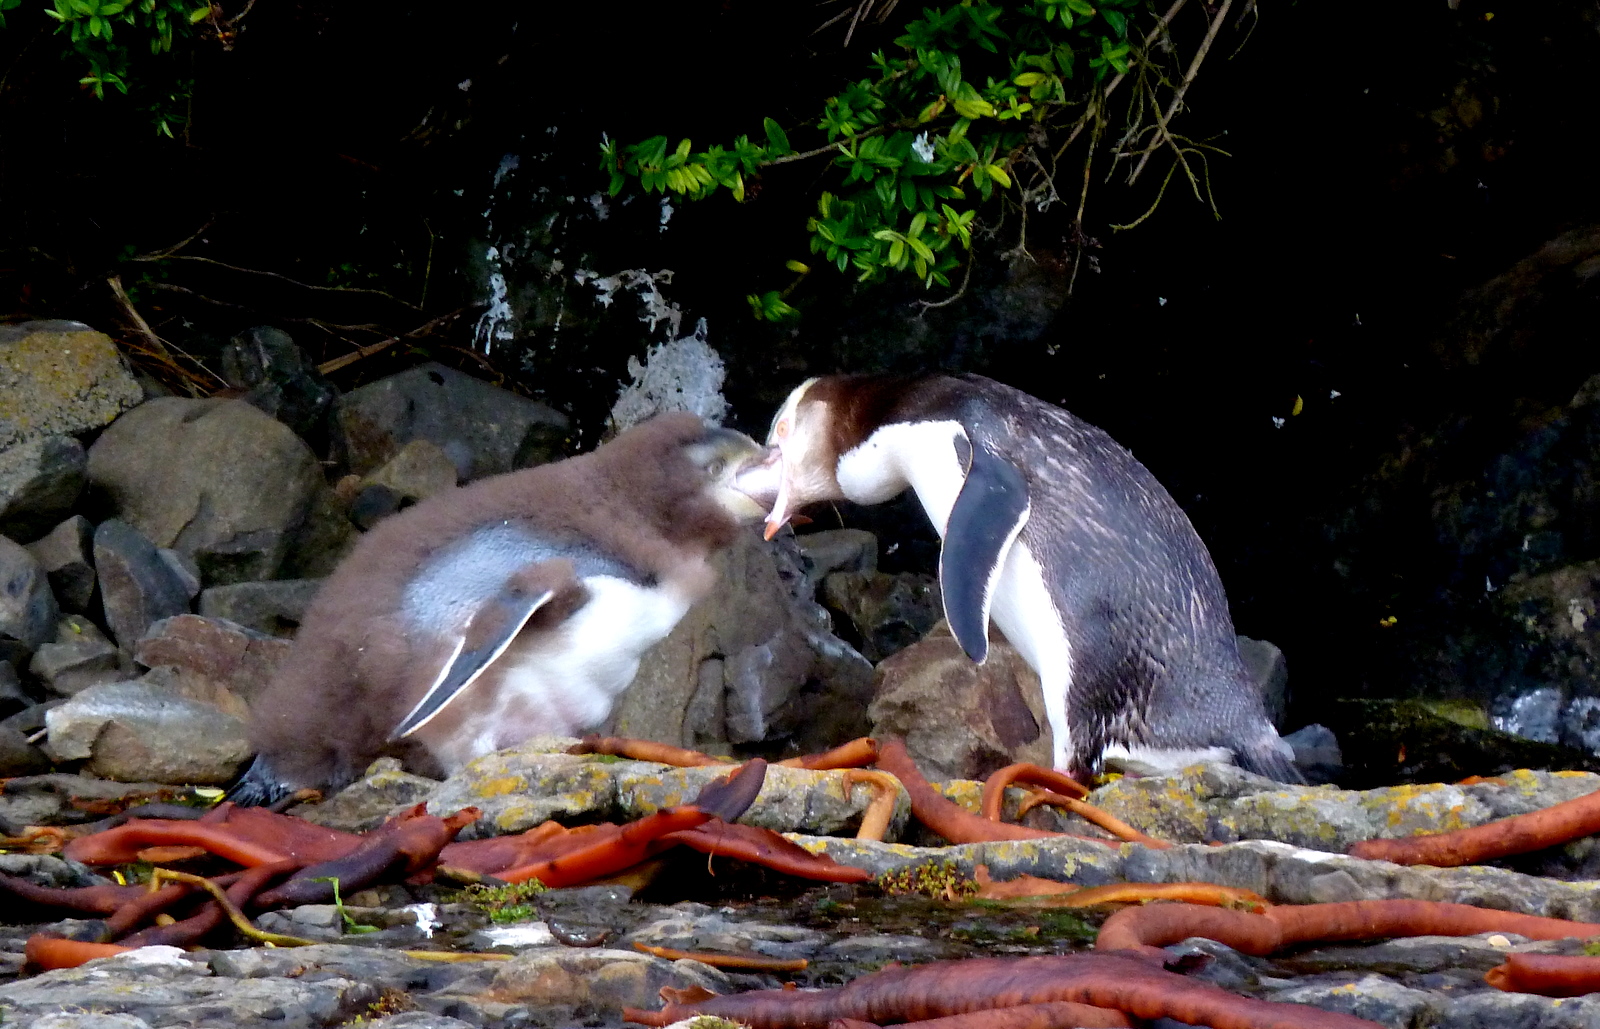 yelow-eye-penguins-feeding